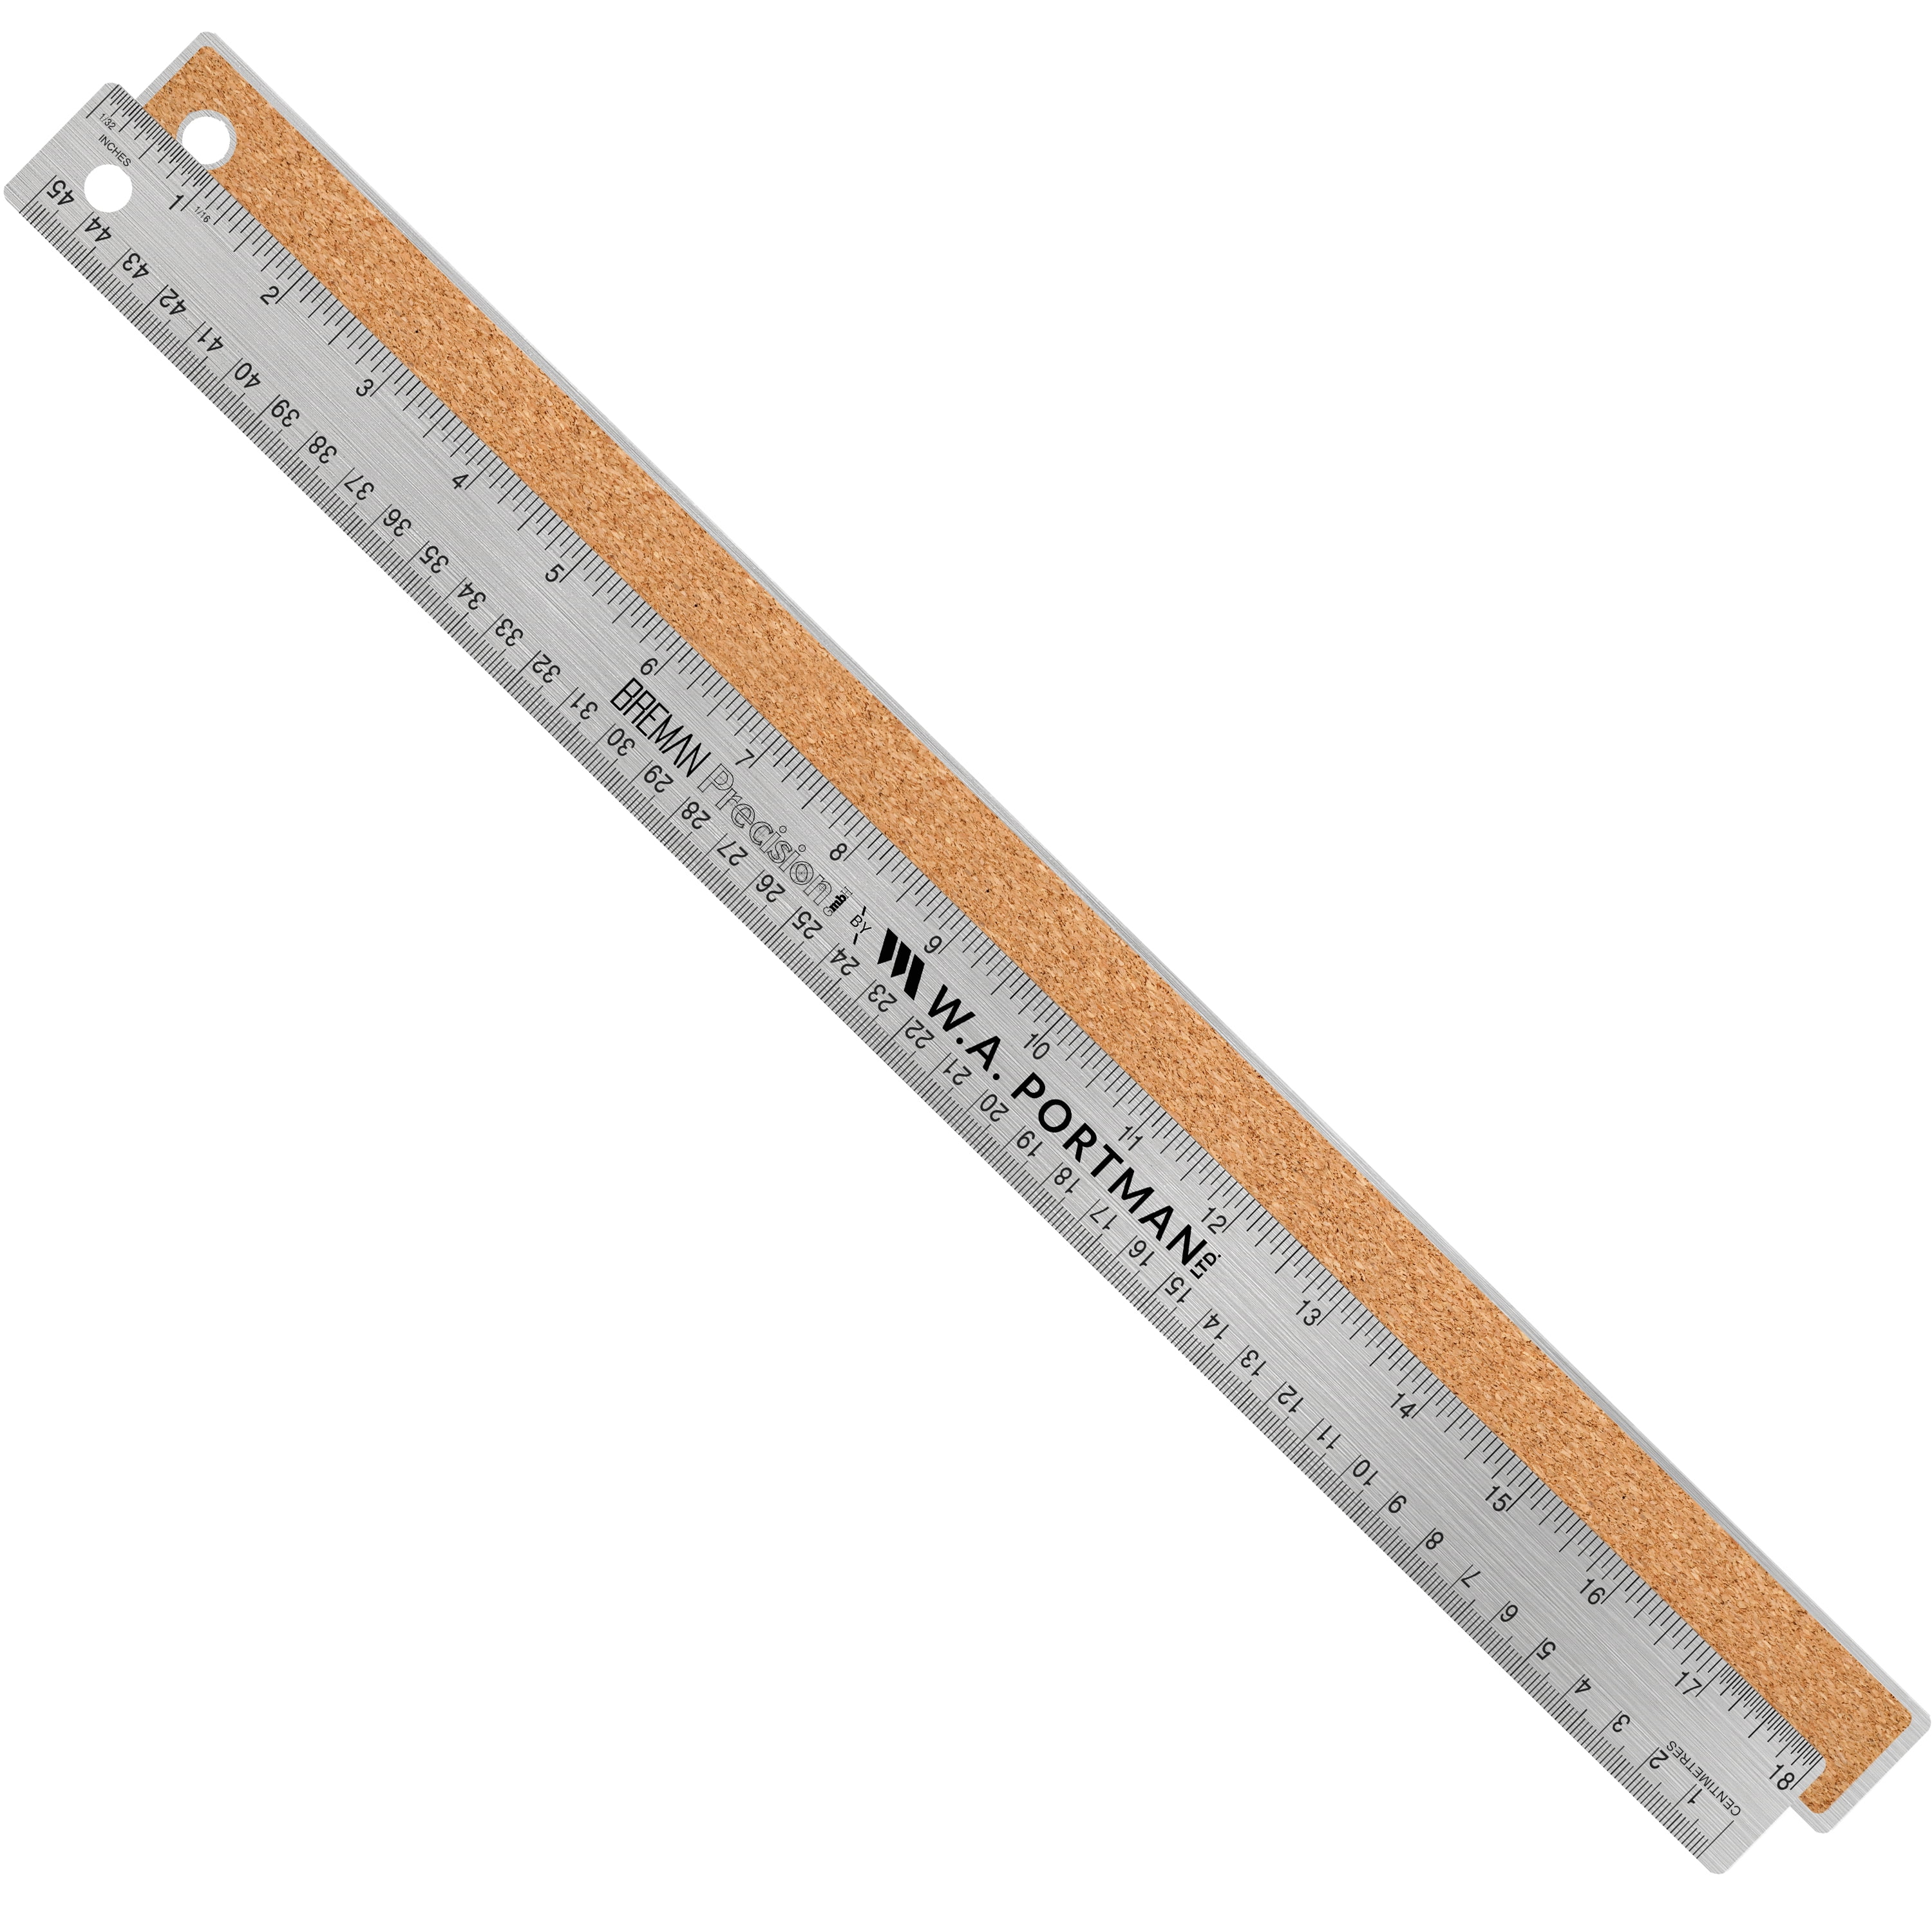 Breman Precision by WA Portman Quilting Ruler, 6x18 Acrylic Ruler 